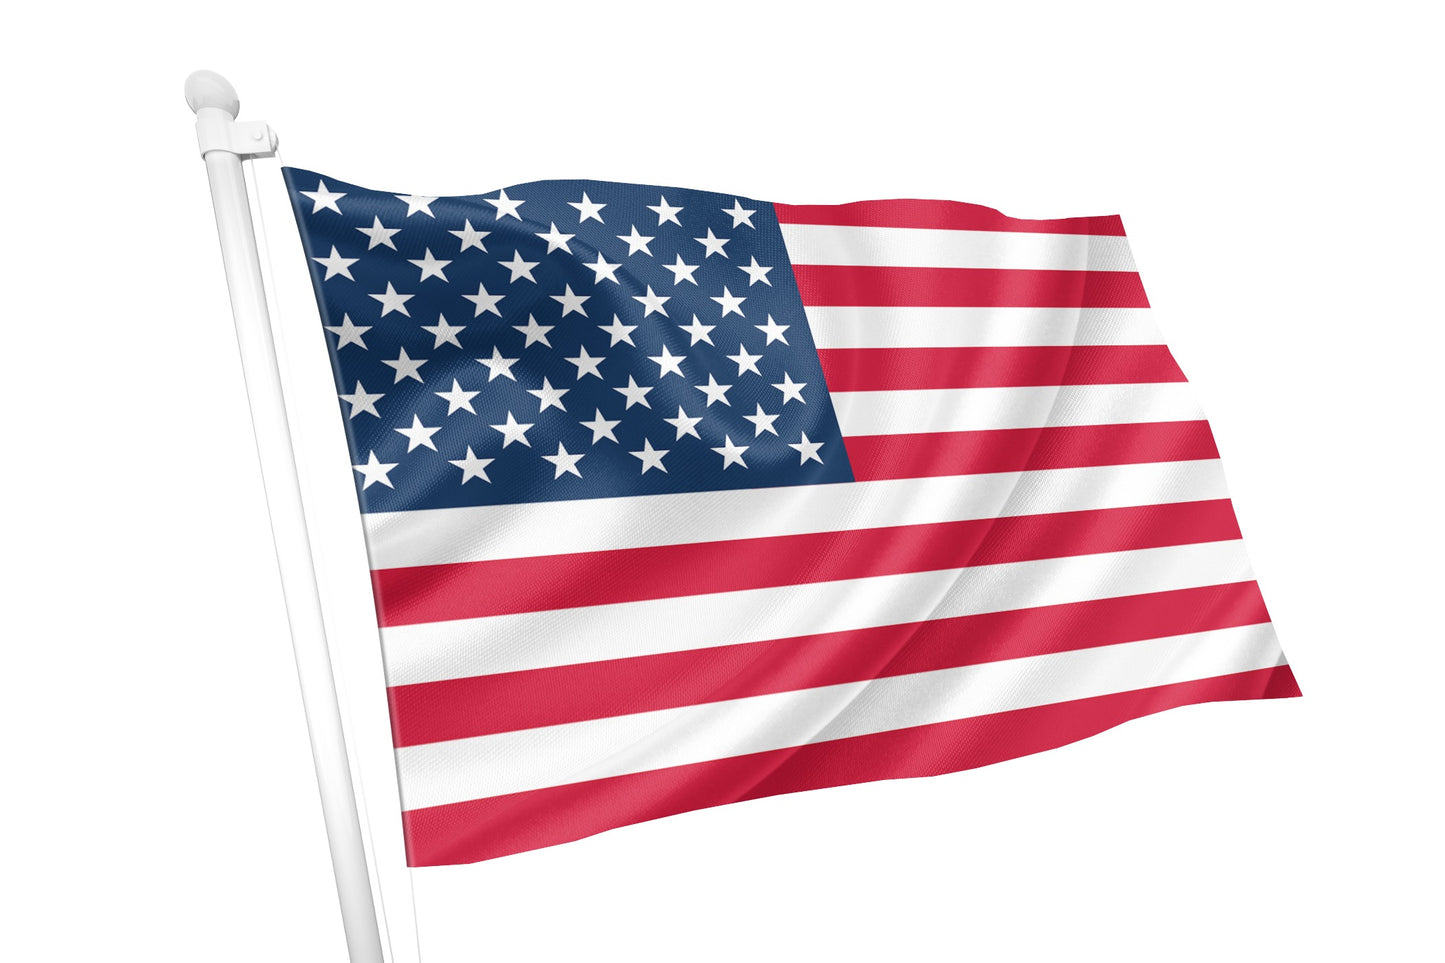 USA - United States of America National Flag